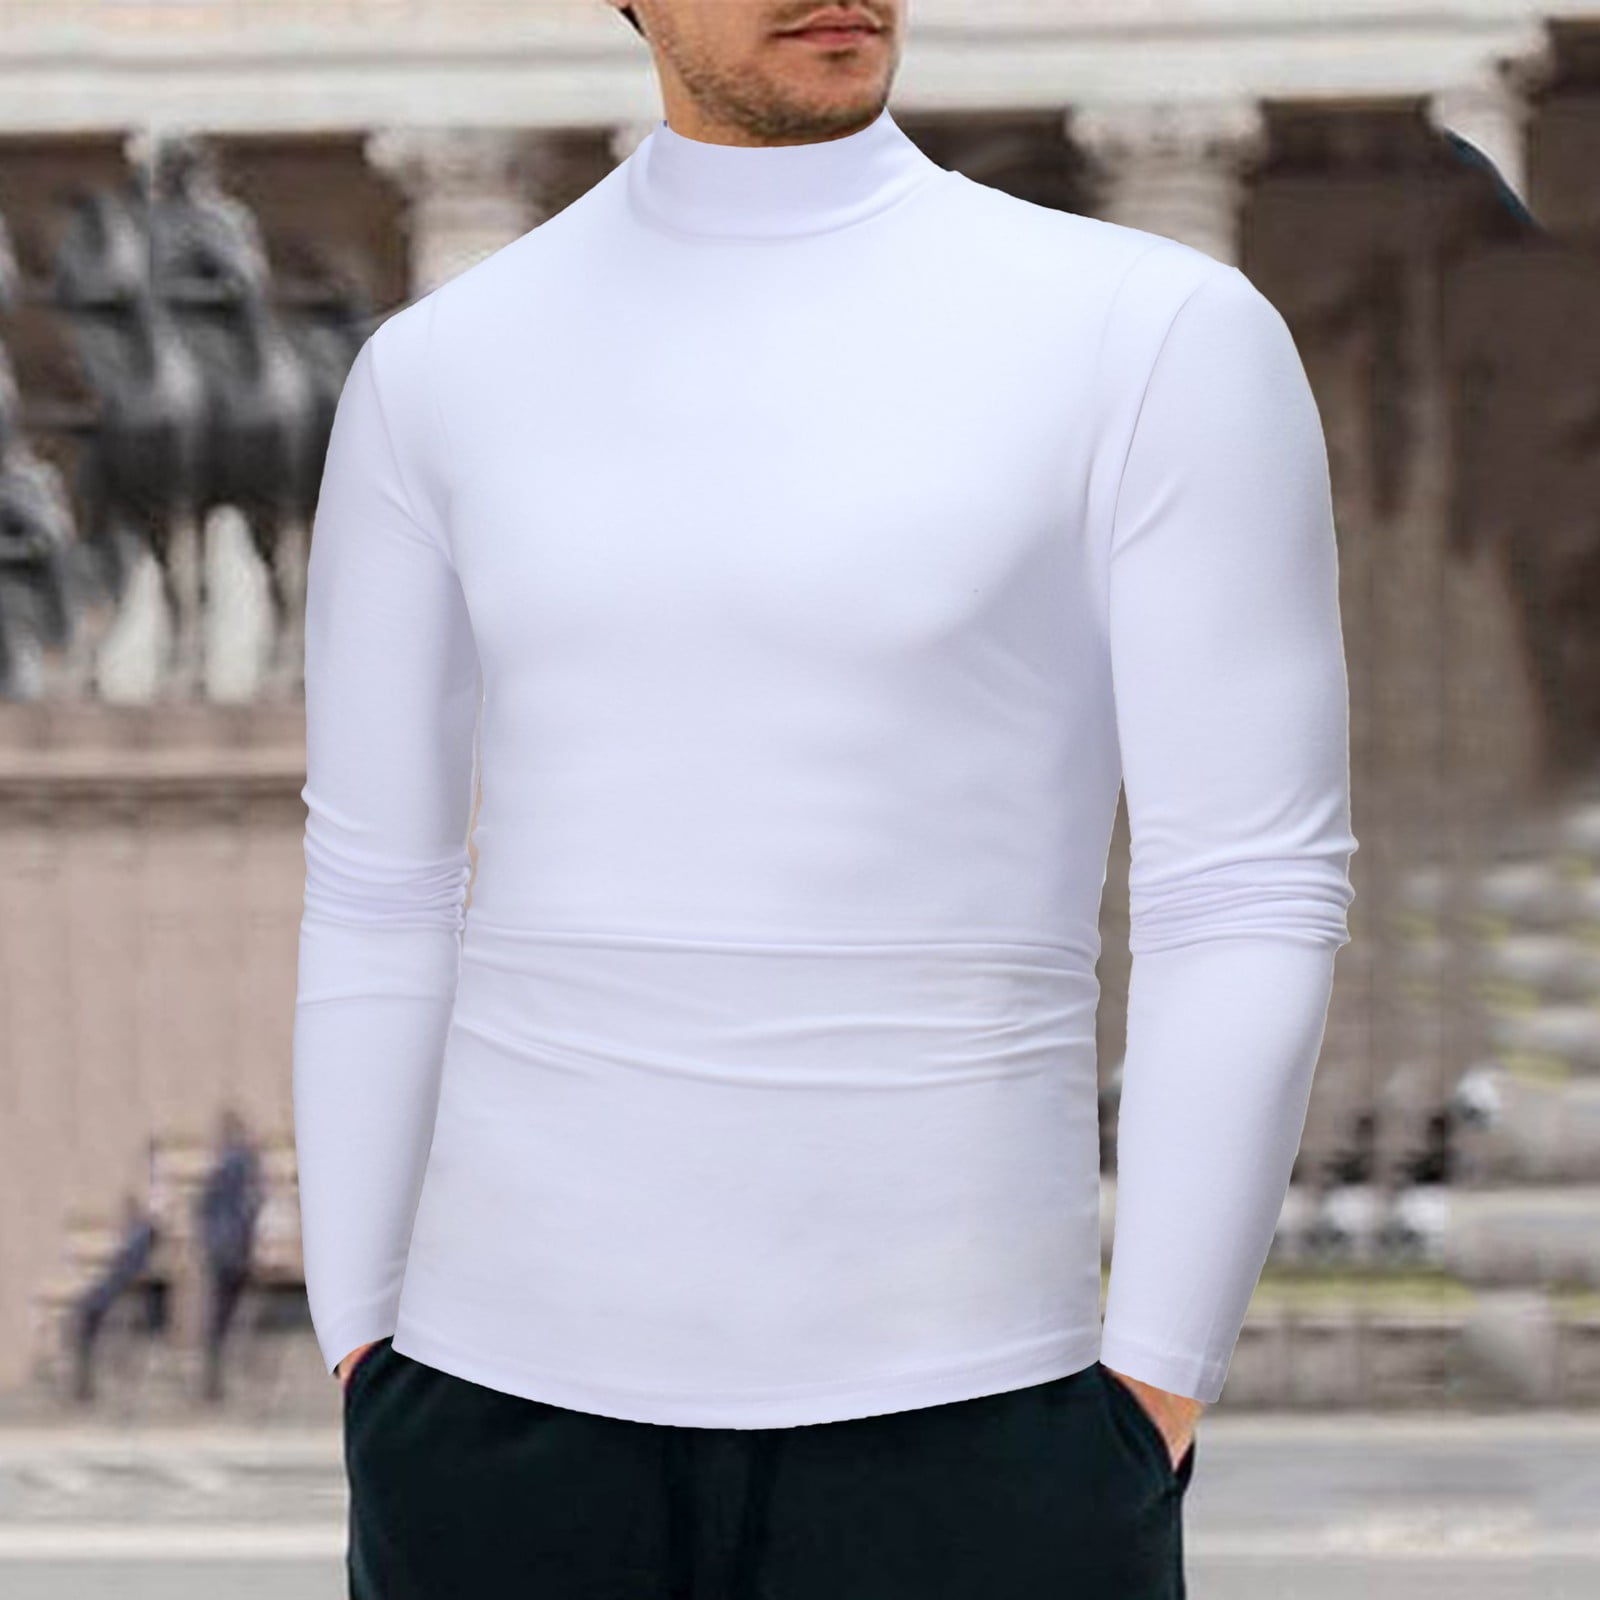 White T Shirt Dress Male Winter Warm Low Collar Fashion Thermal Underwear  Men Basic Plain T Shirt Blouse Pullover Long Sleeve Top